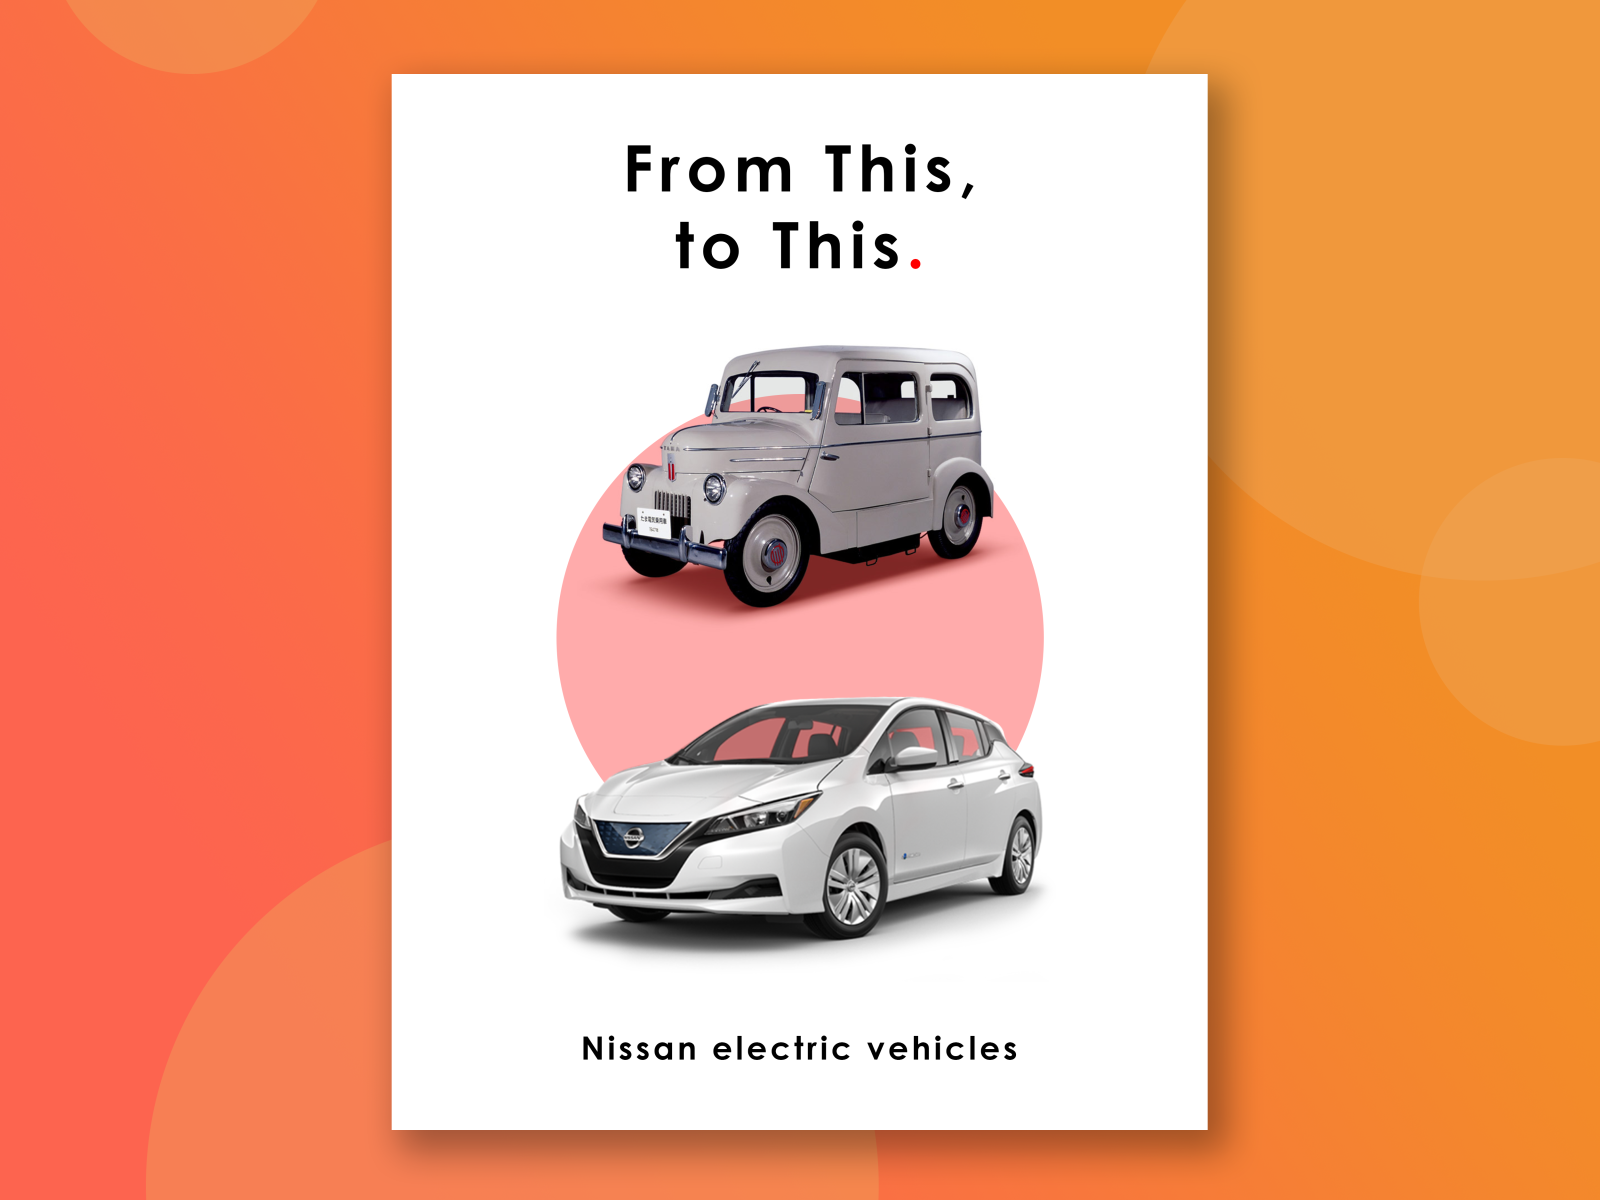 Nissan Electric Vehicles Poster by Gavin Krohman on Dribbble